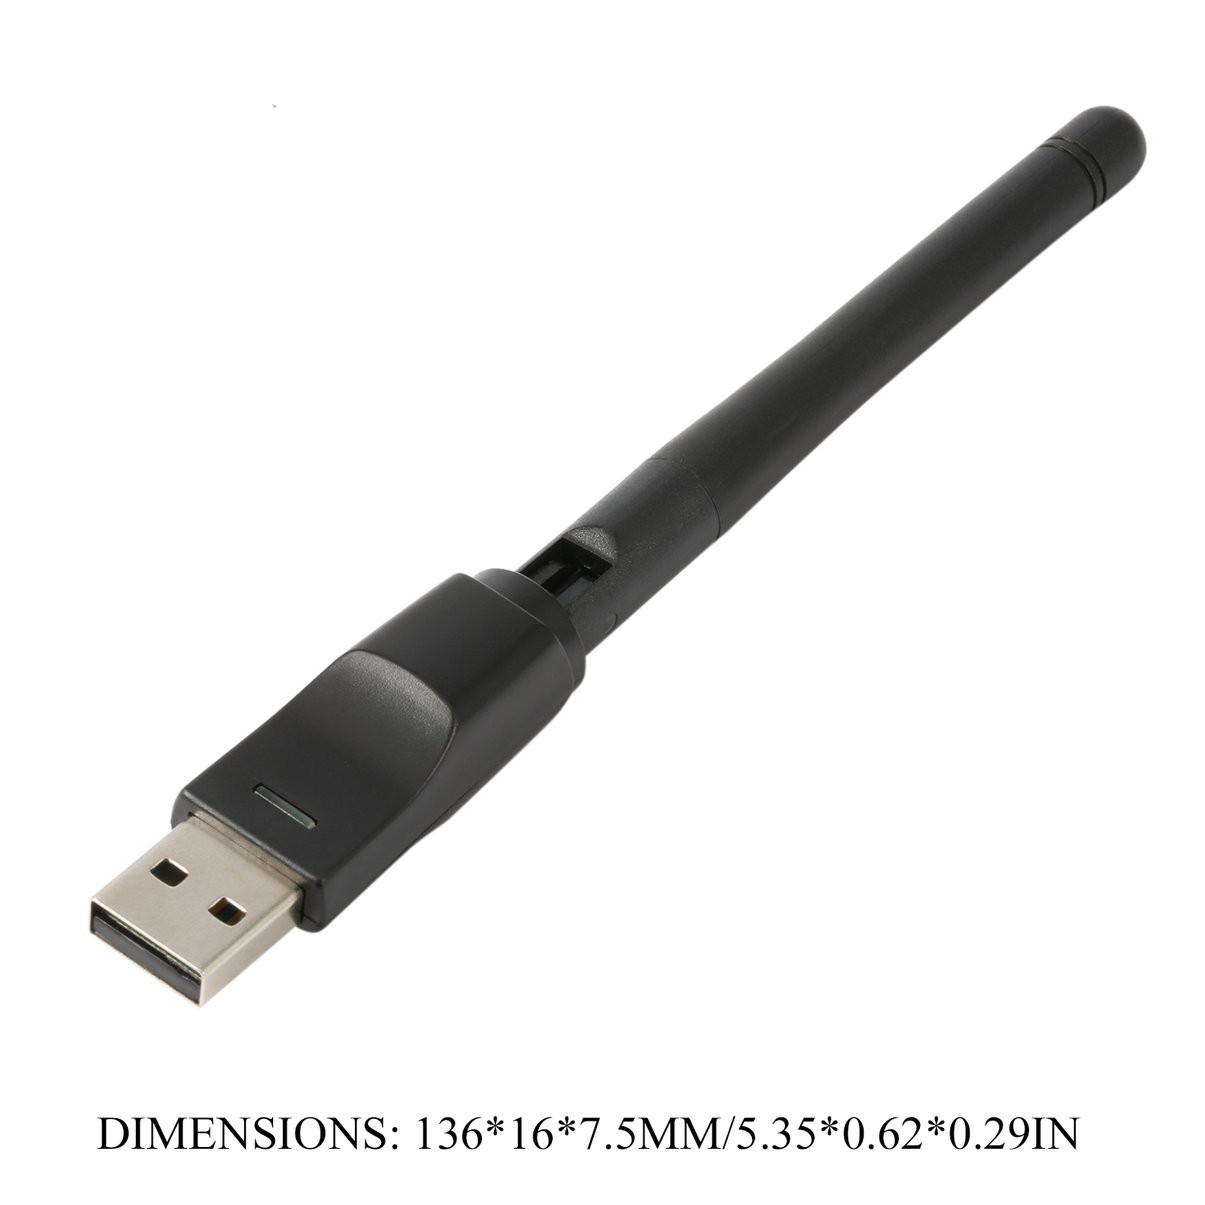 Mini Wireless USB WiFi 150M Network Card LAN Adapter Dongle For PC Laptop